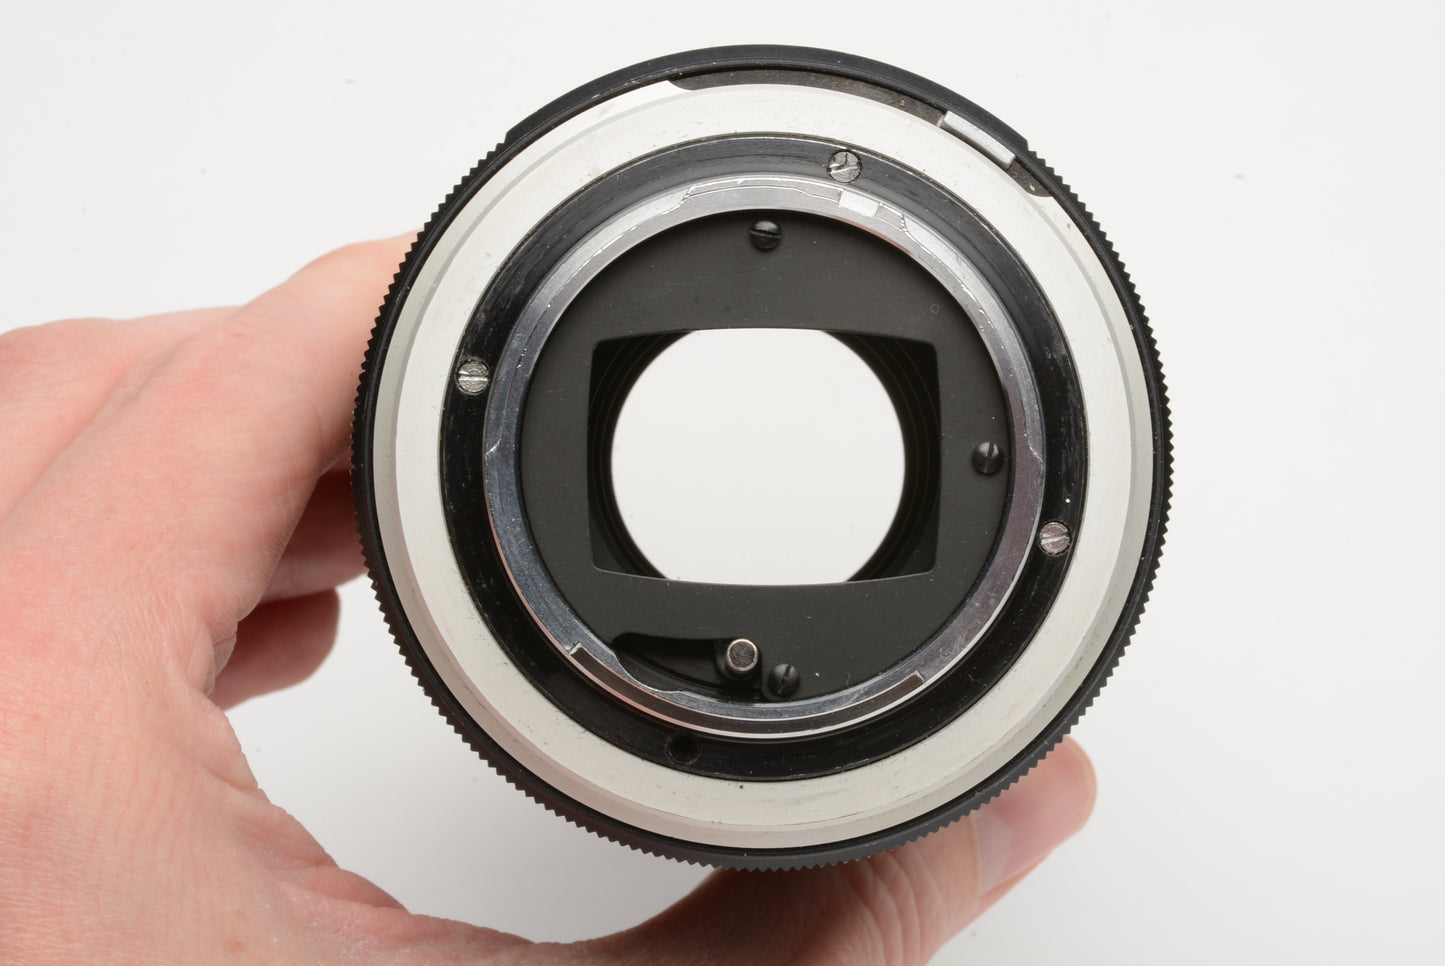 Minolta Rokkor QF 200mm f3.5 MD mount prime lens, caps, clean and sharp